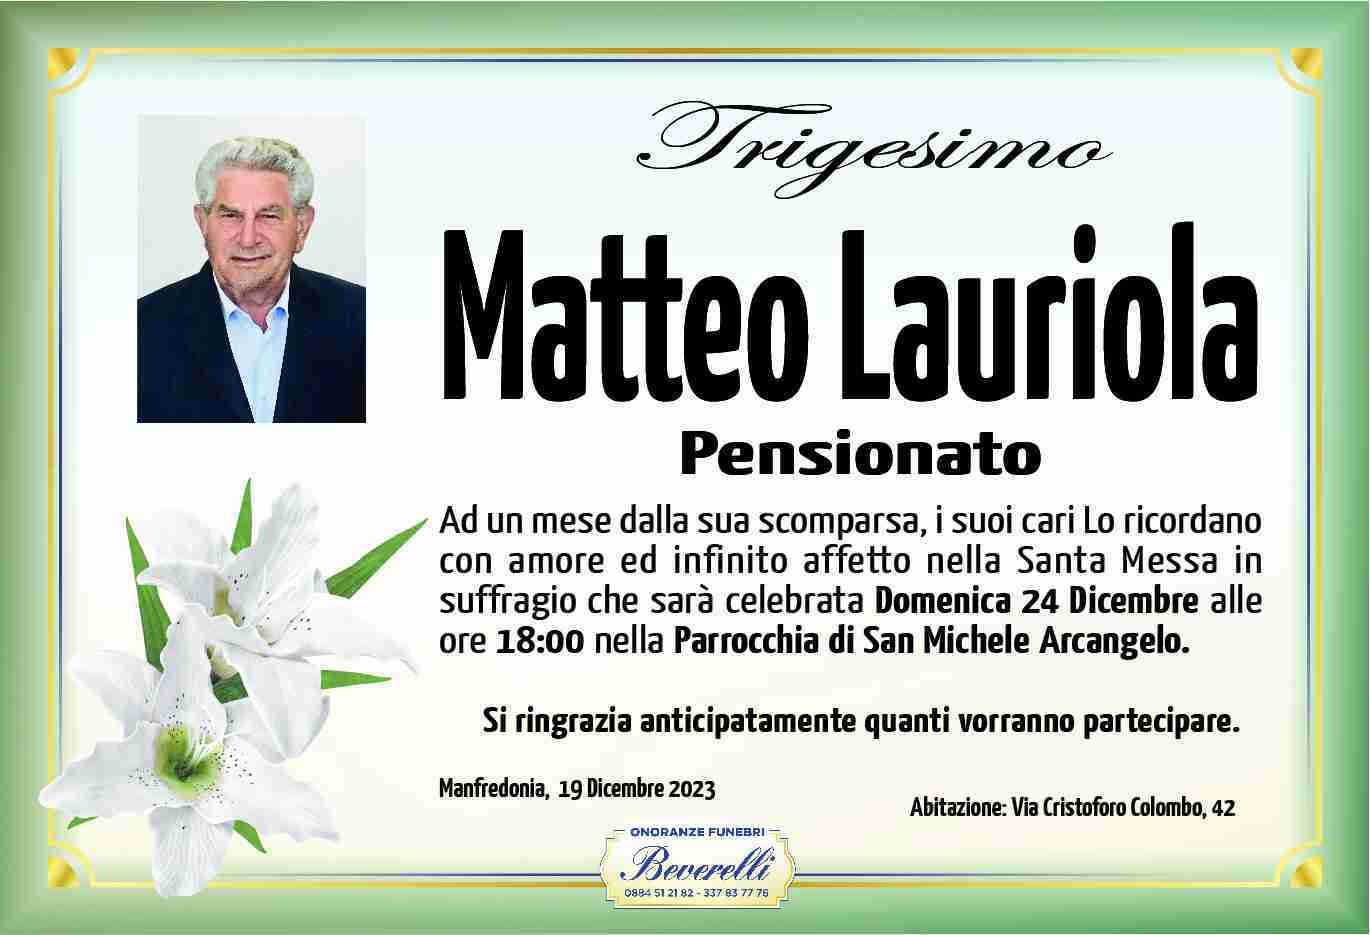 Matteo Lauriola